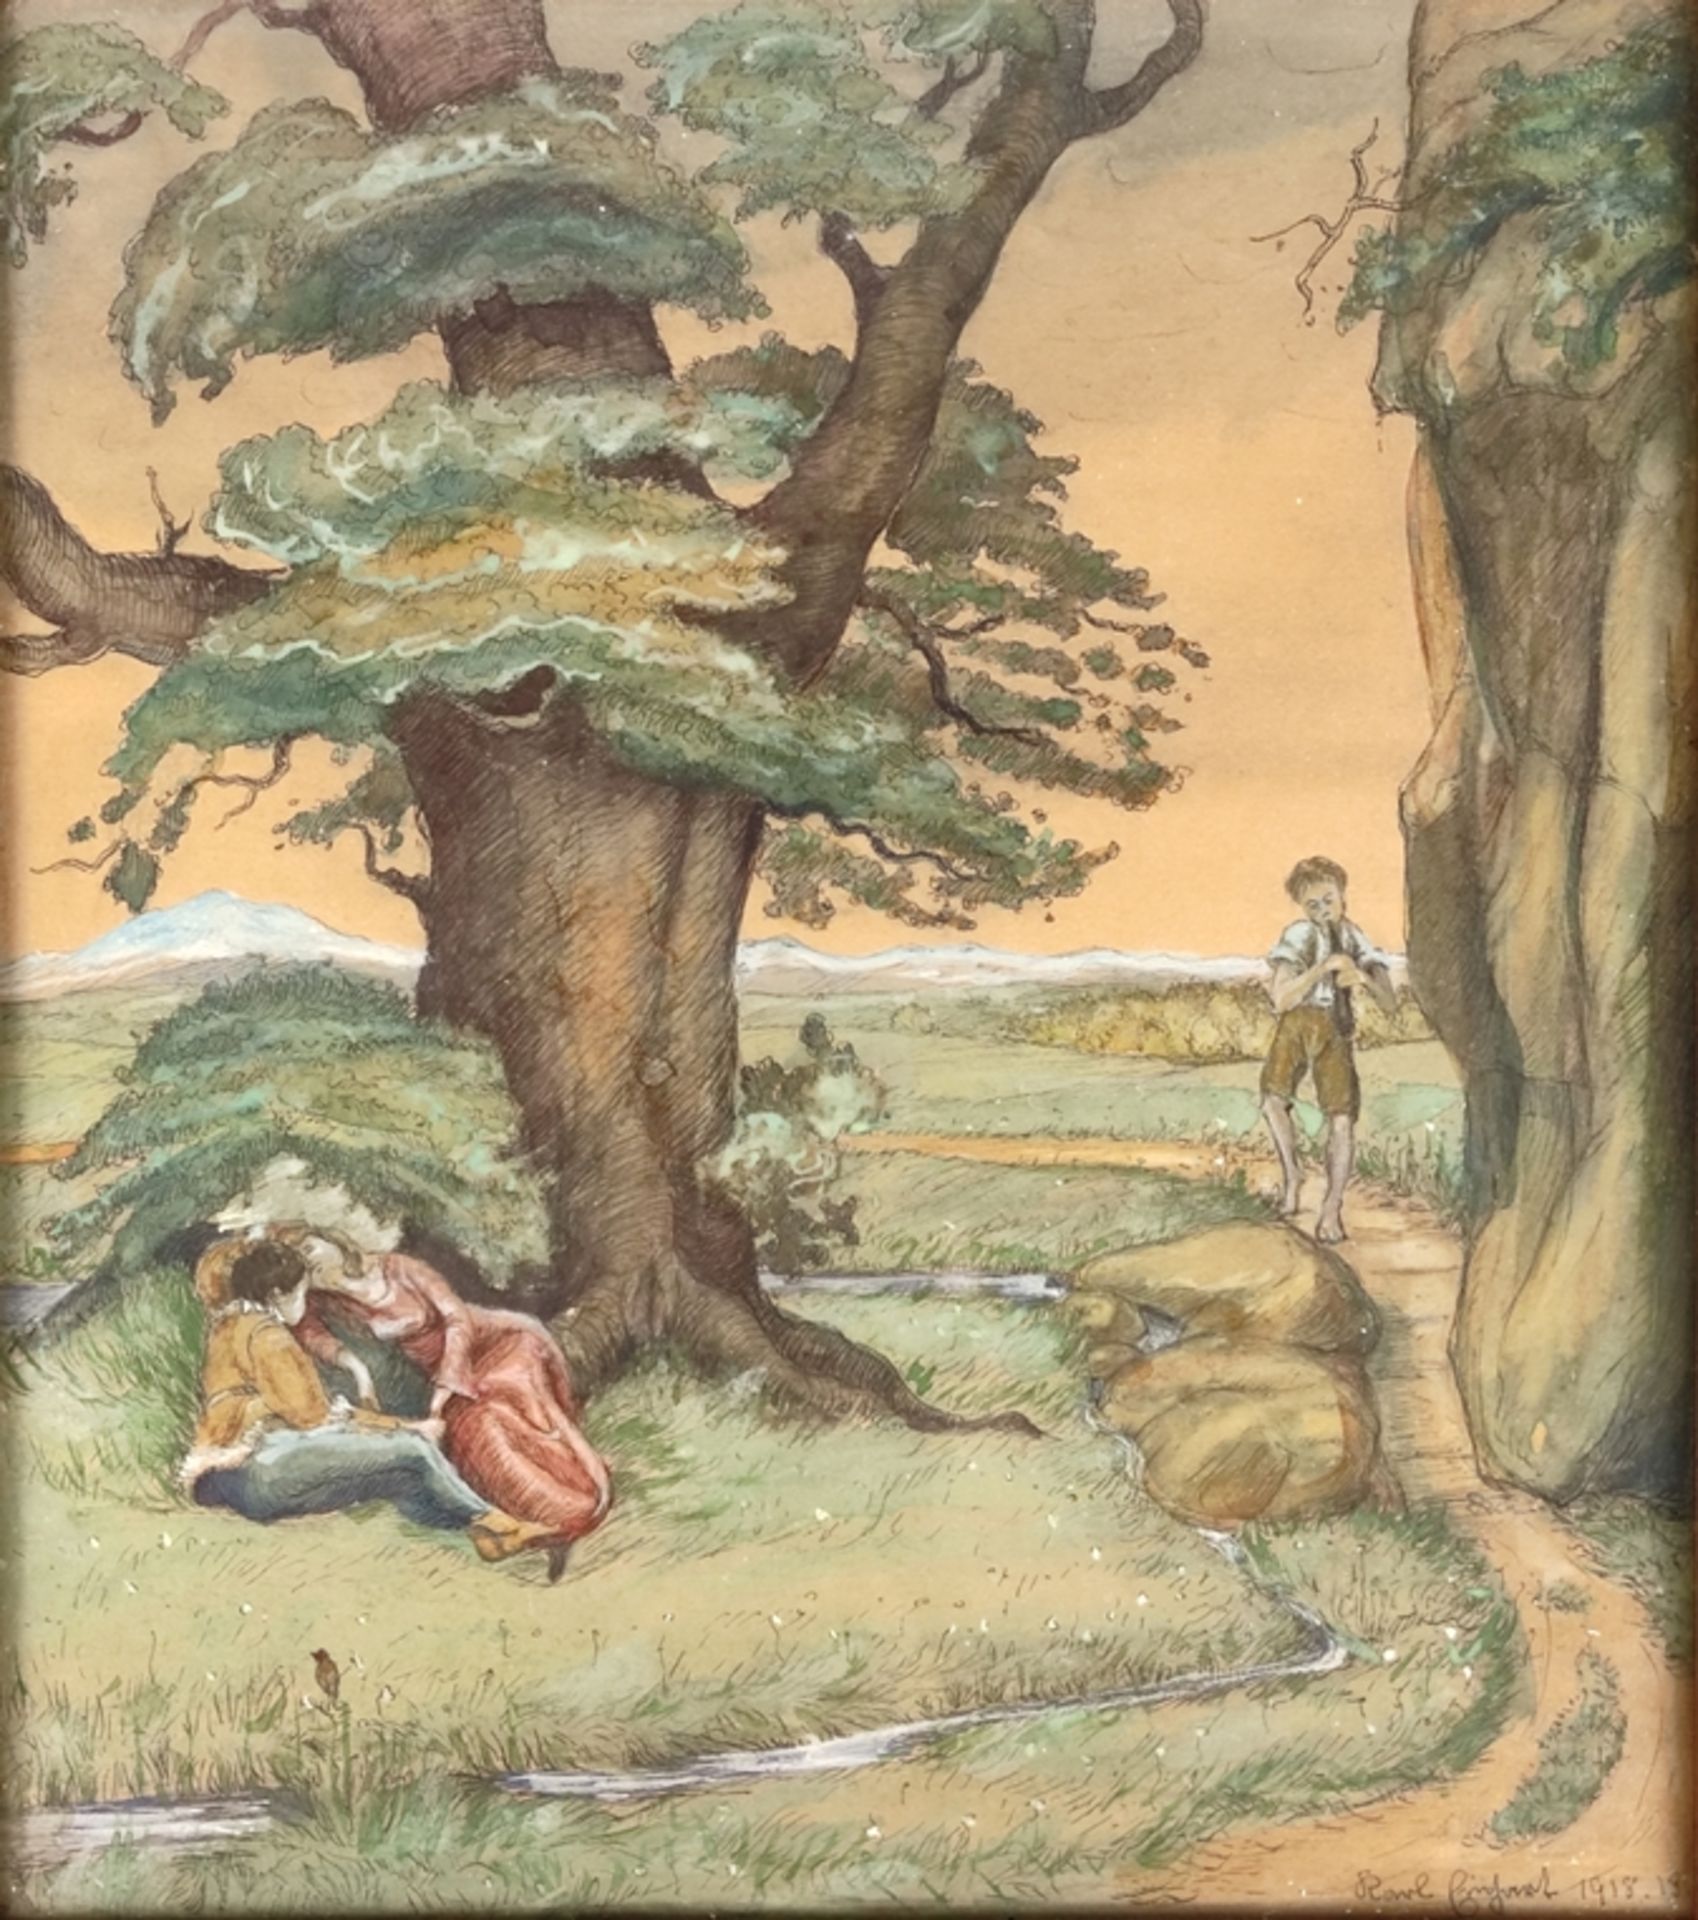 Einhart, Karl (1884-1967 Constance) "Flute player with lovers", lying under oak tree on meadow, wat